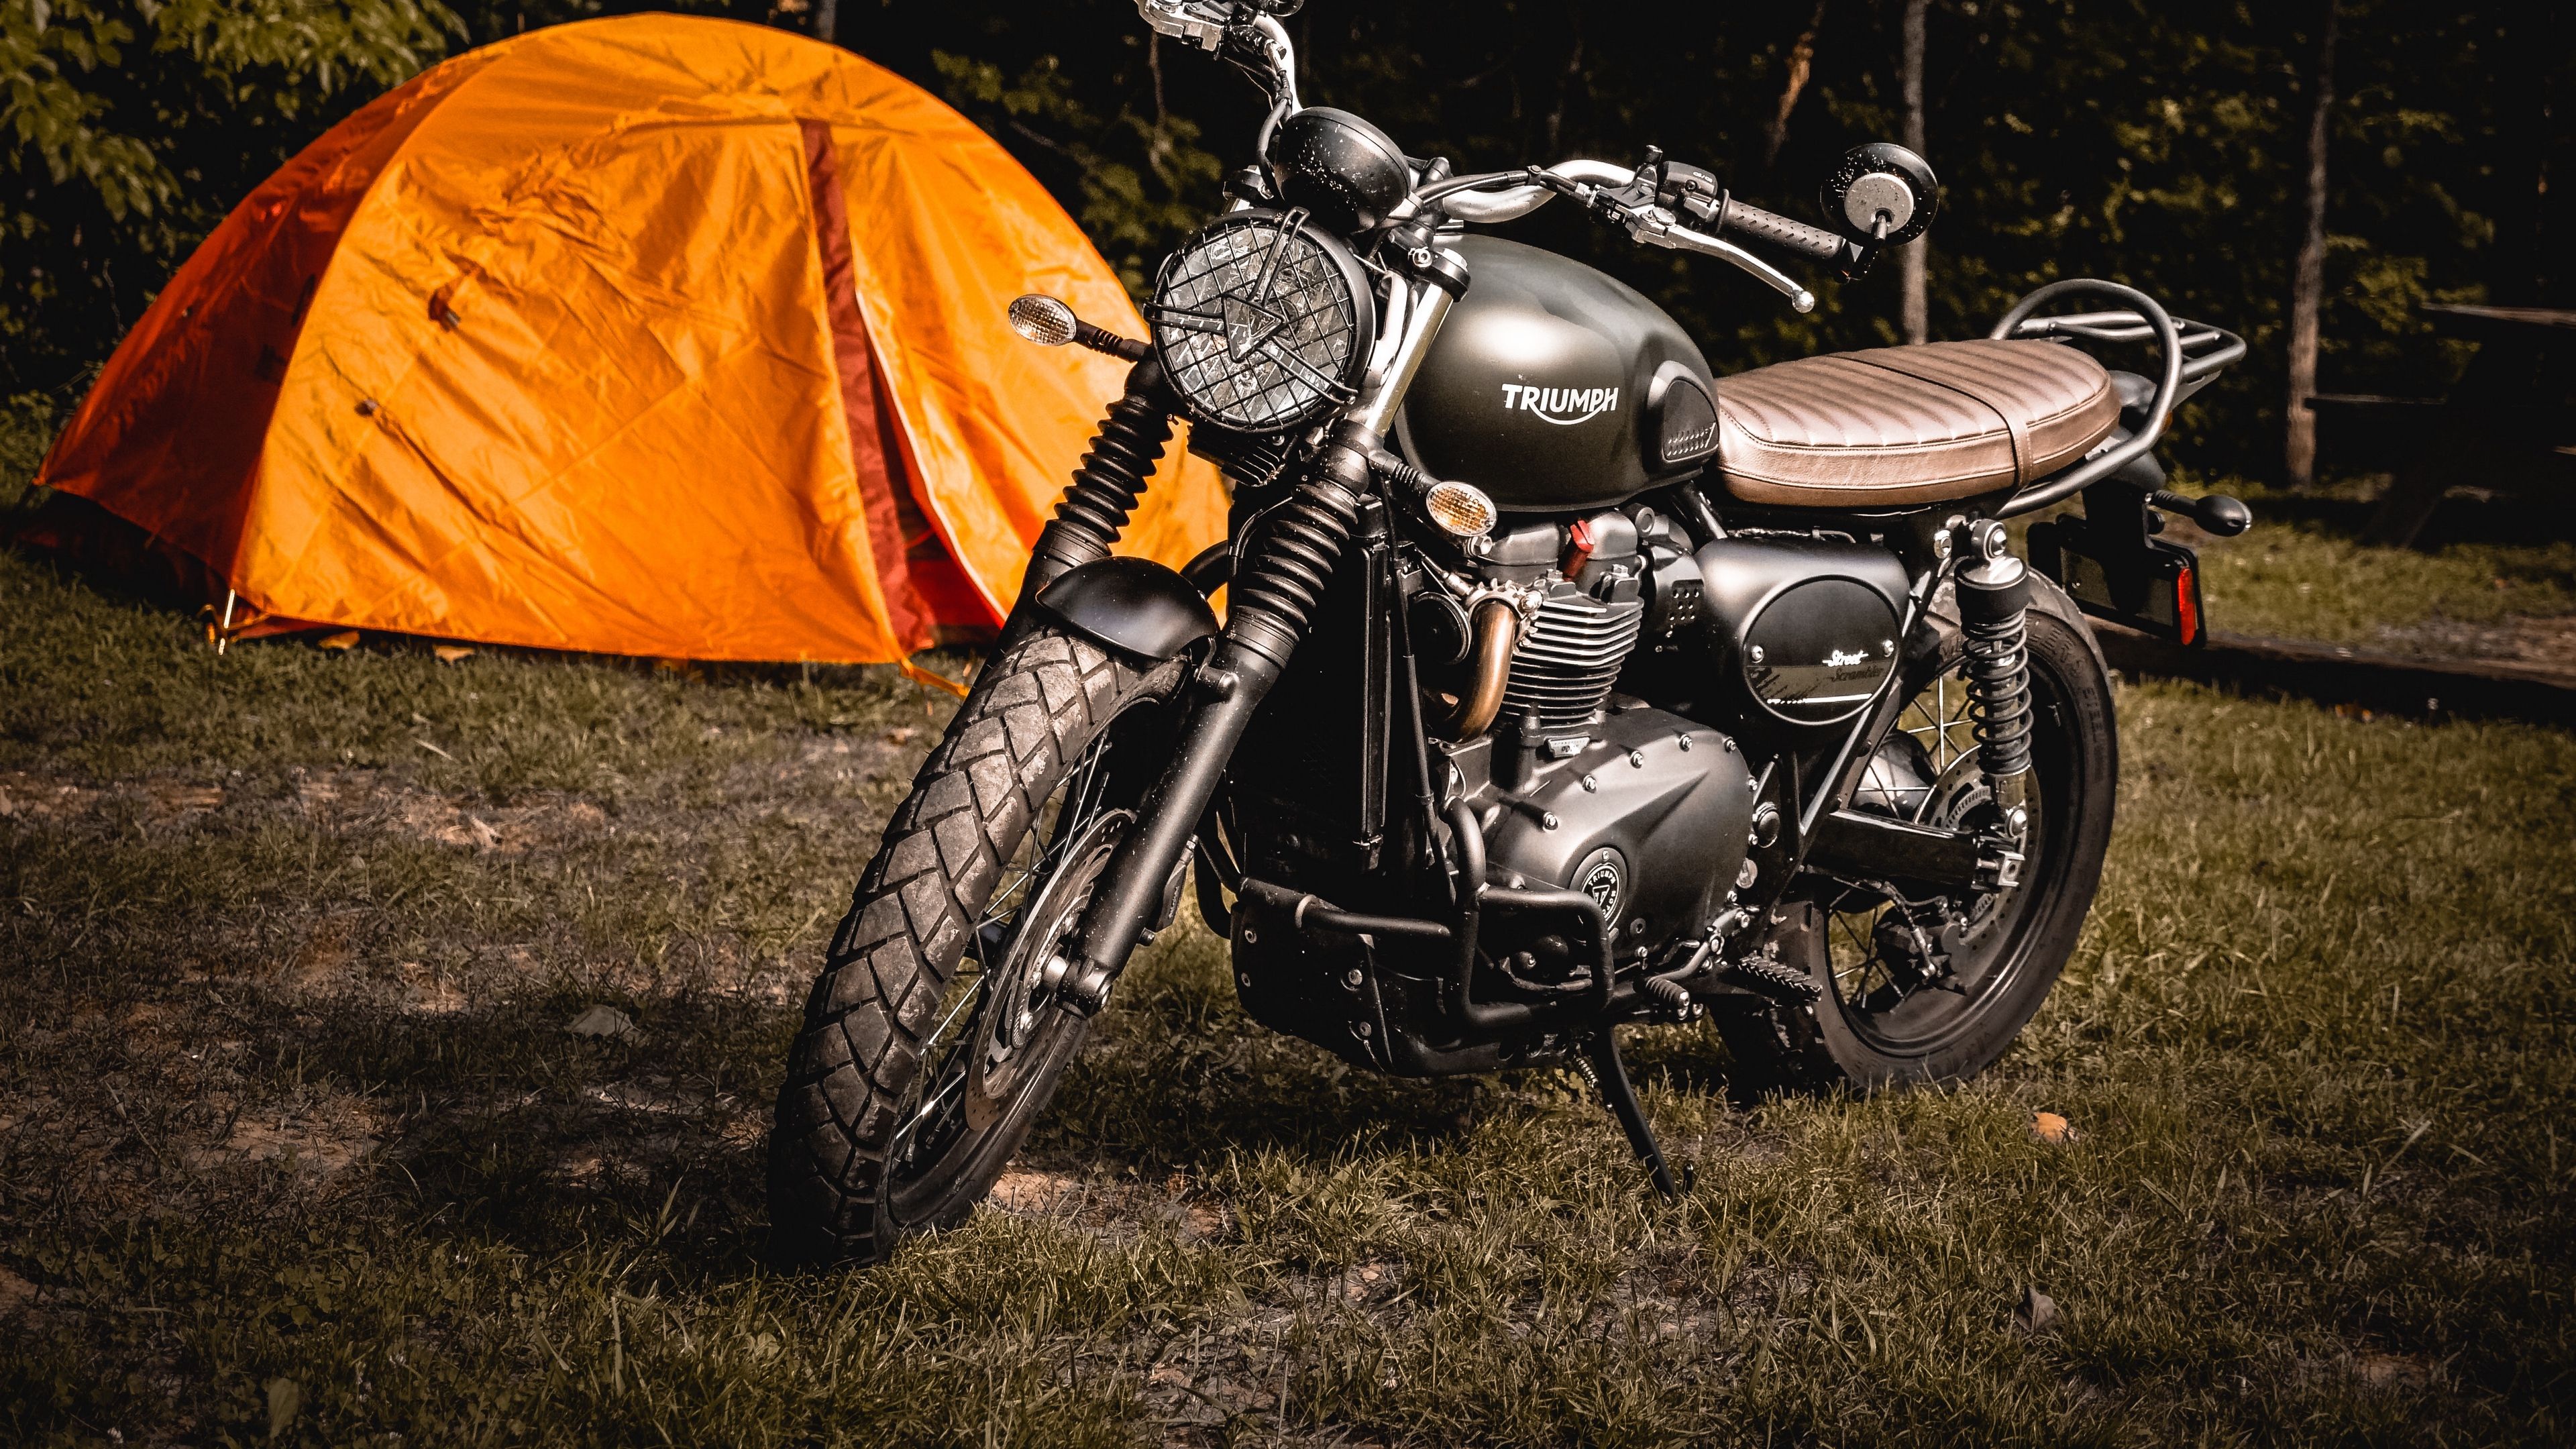 Wallpaper 4k motorcycle, tent, grass 4k Grass, Motorcycle, tent